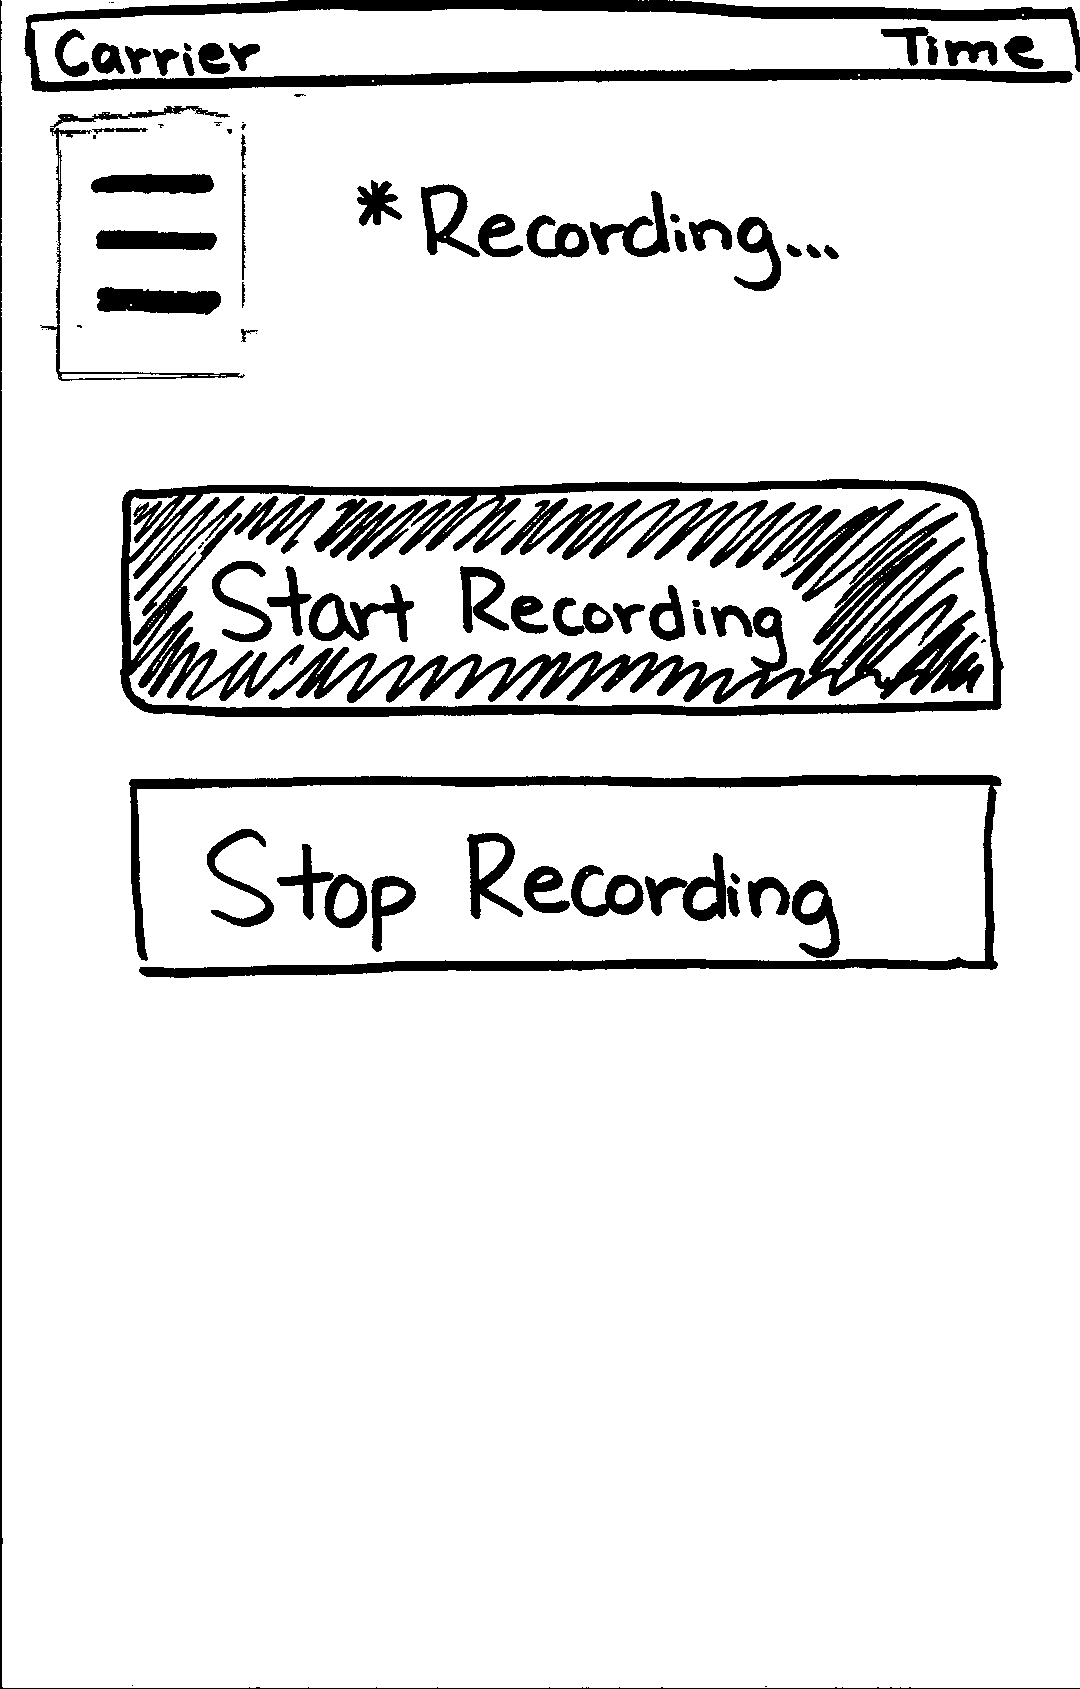 start recording button pressed